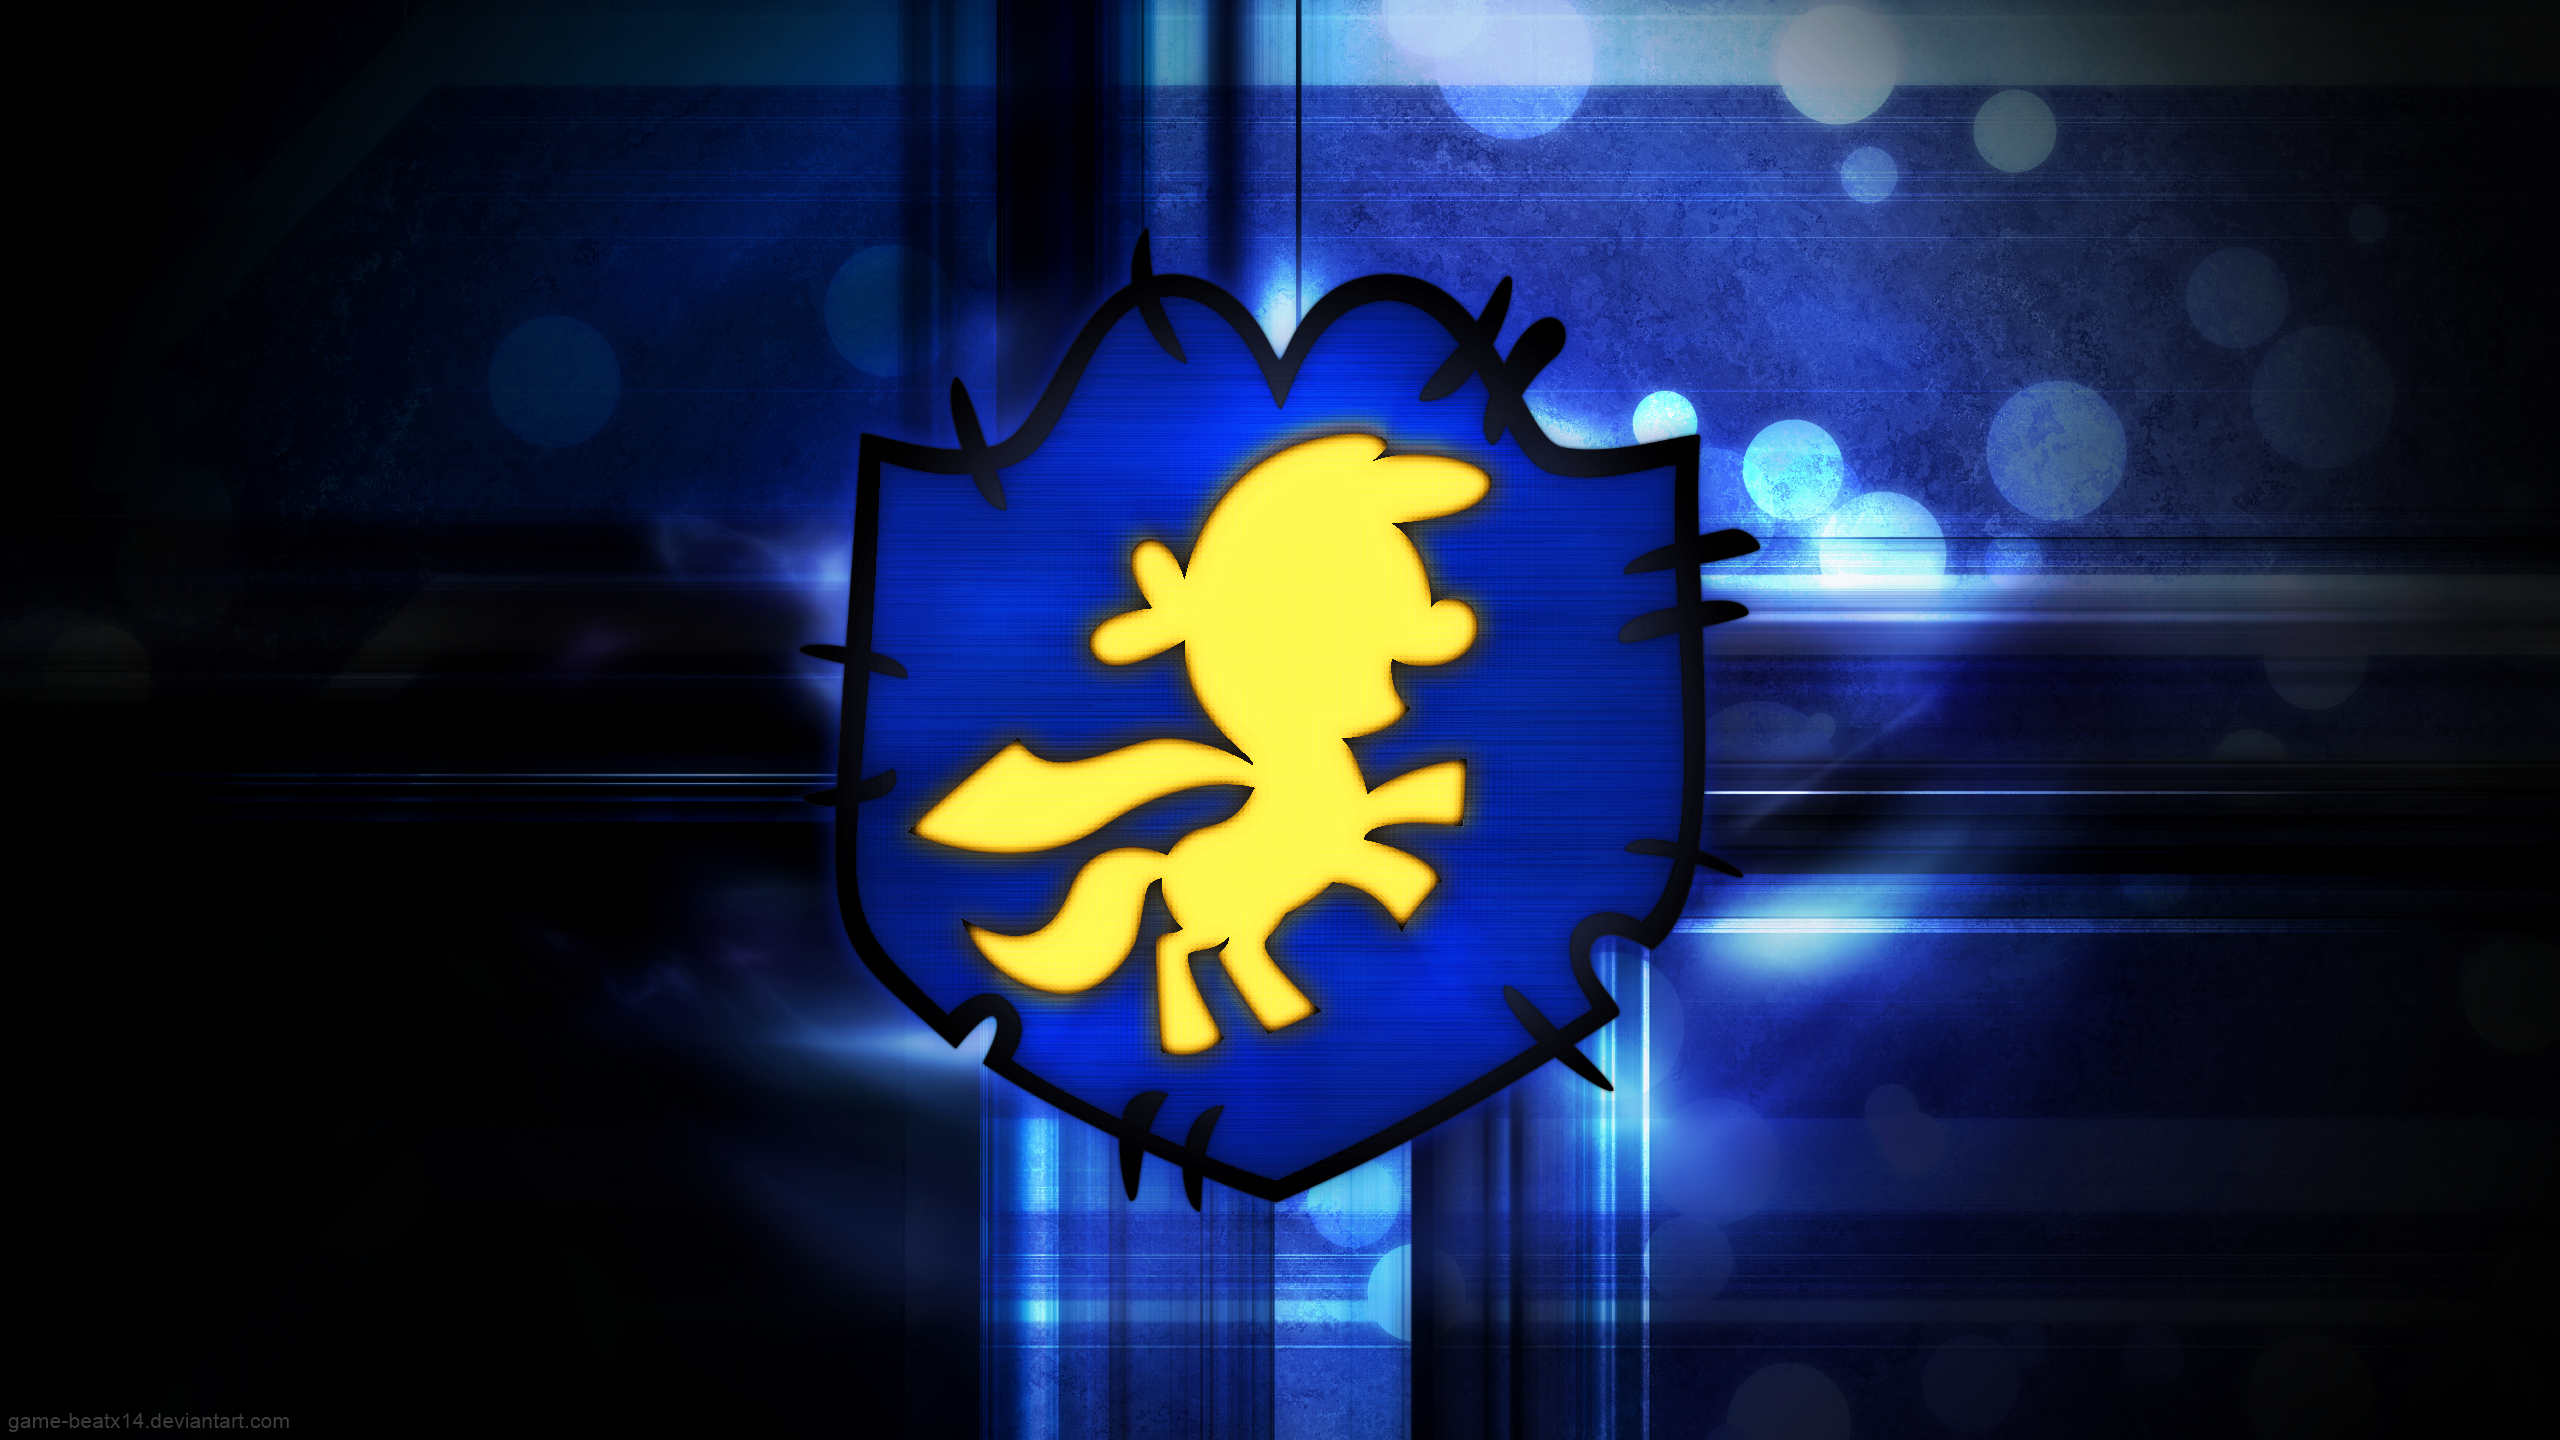 CMC Emblem Wallpaper by AtomicGreymon and Game-BeatX14